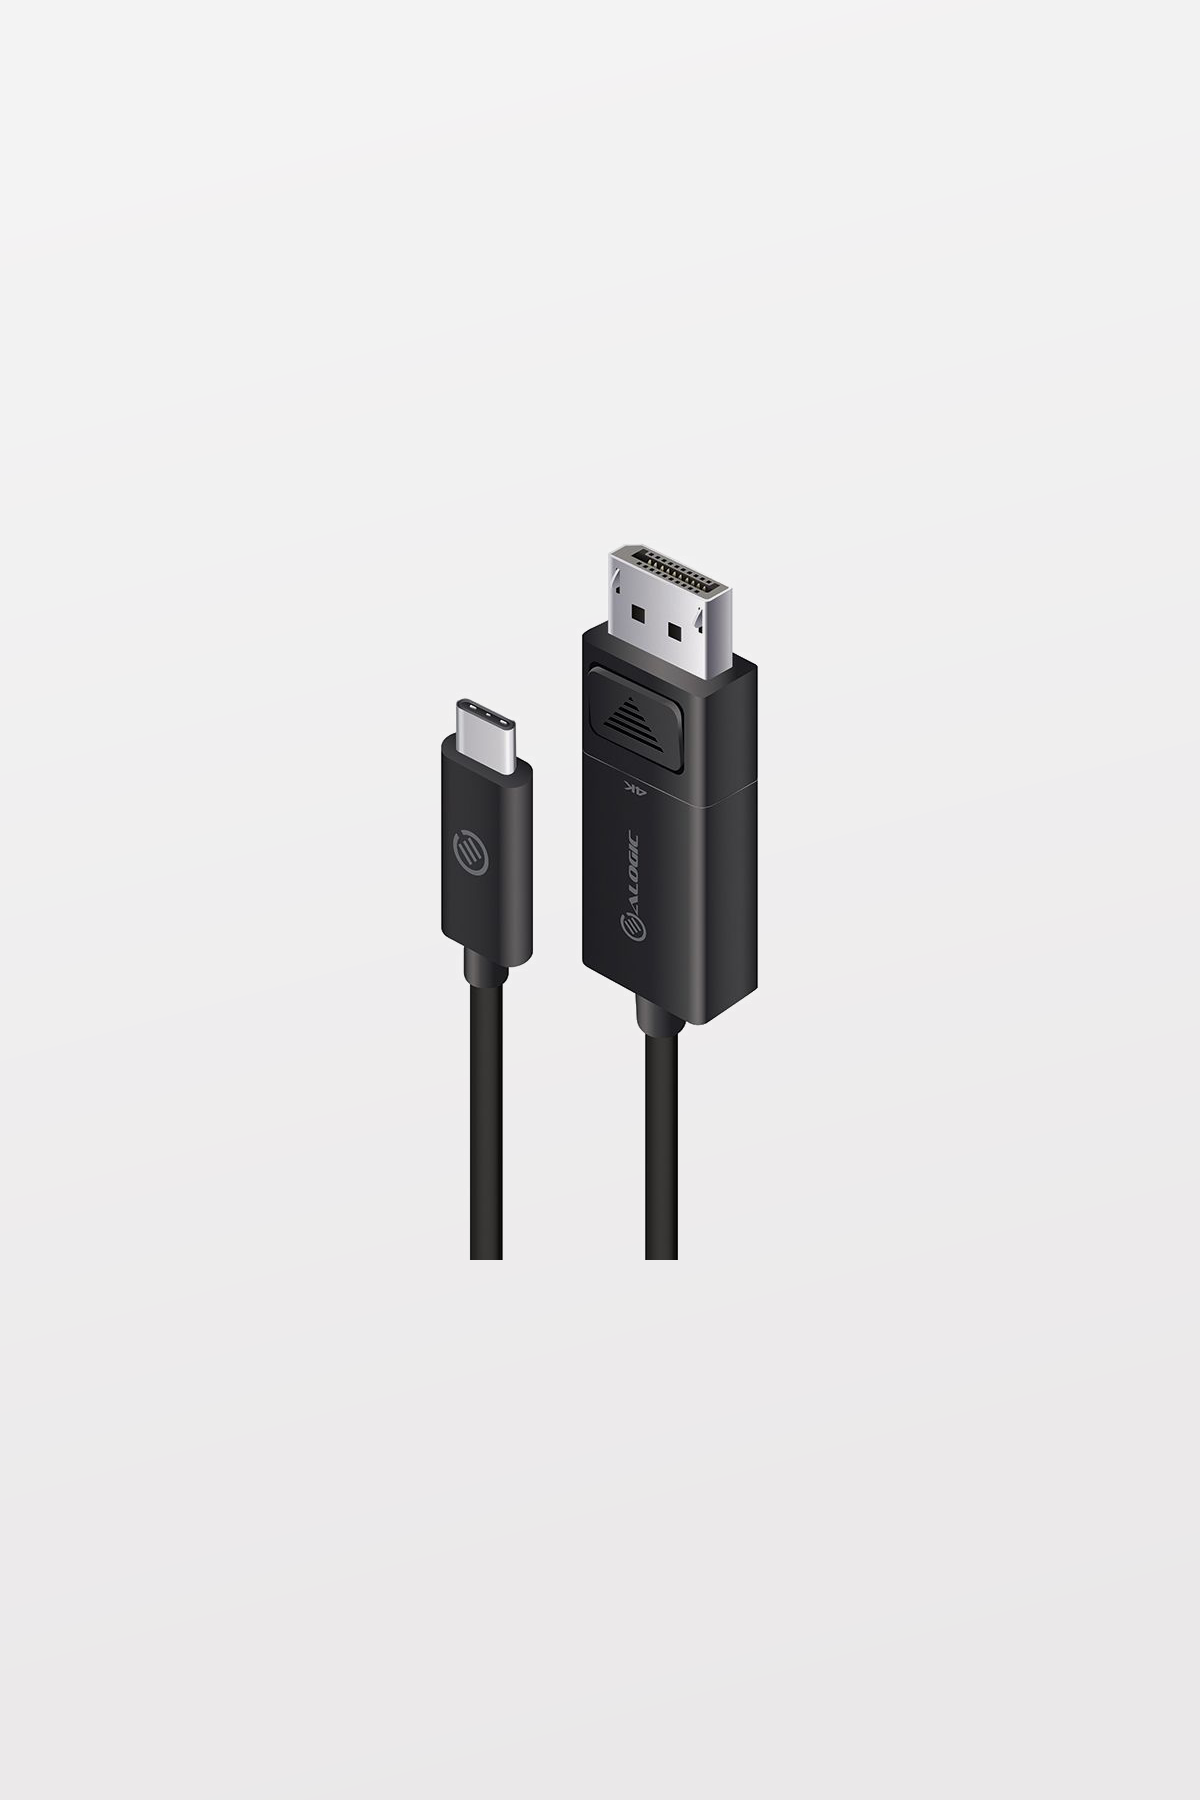 ALOGIC USB-C to Displayport Cable - 4K - 1m